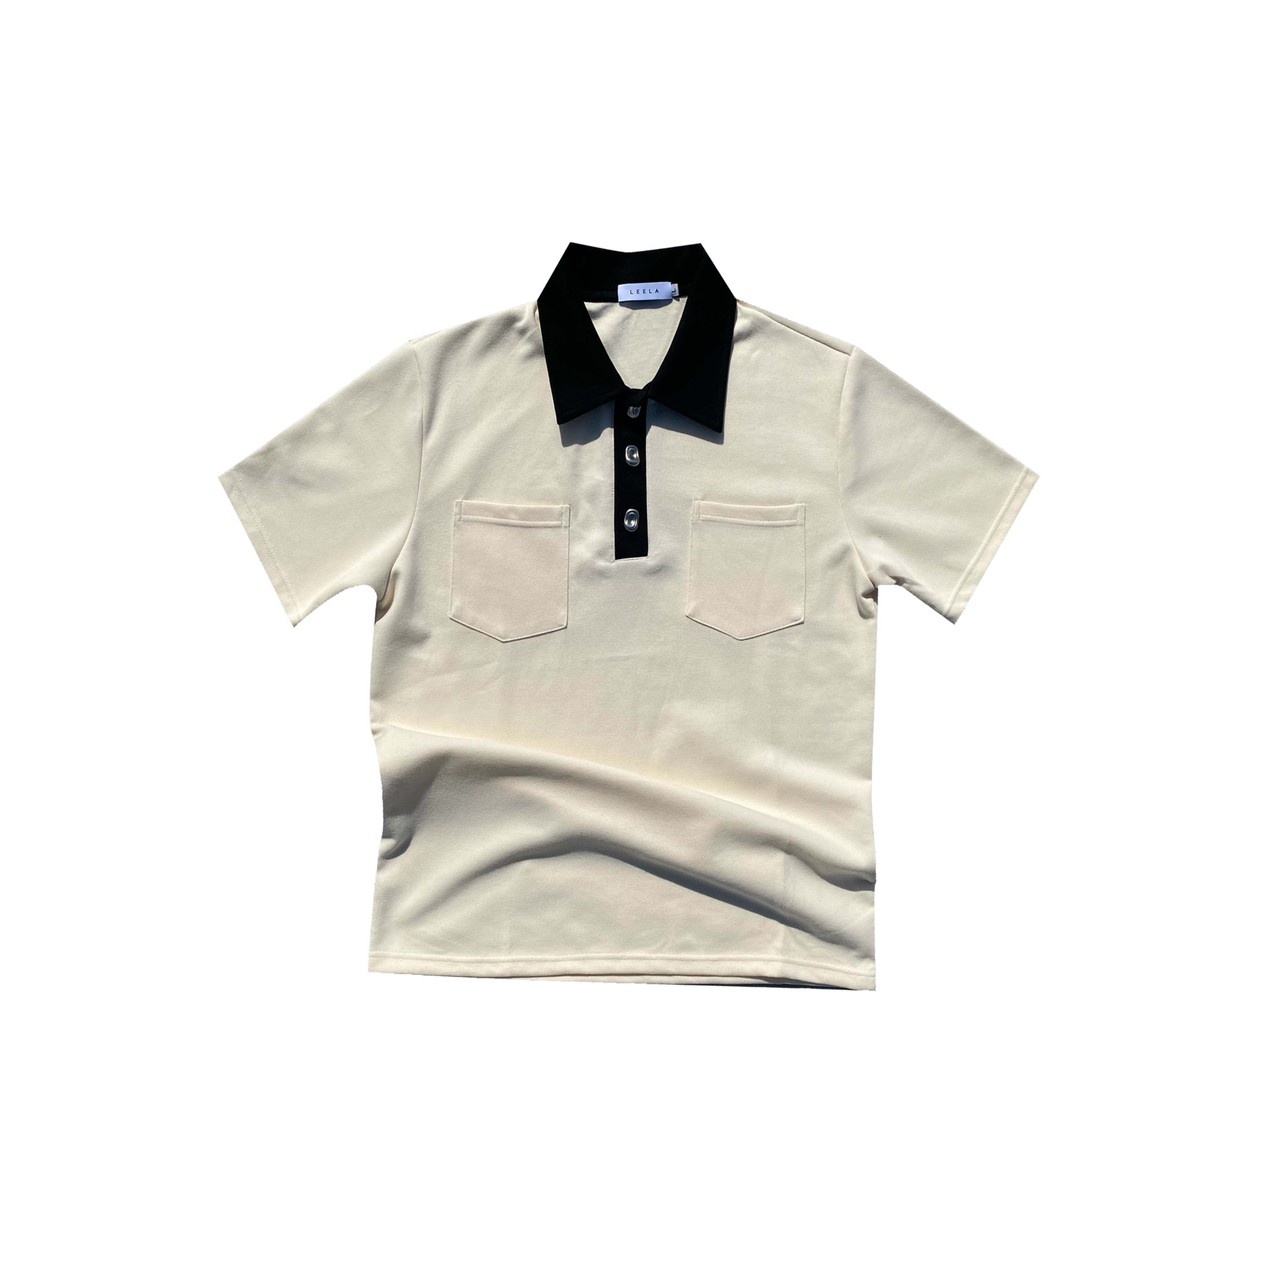 Two-Tone Polo Shirt (Beige)